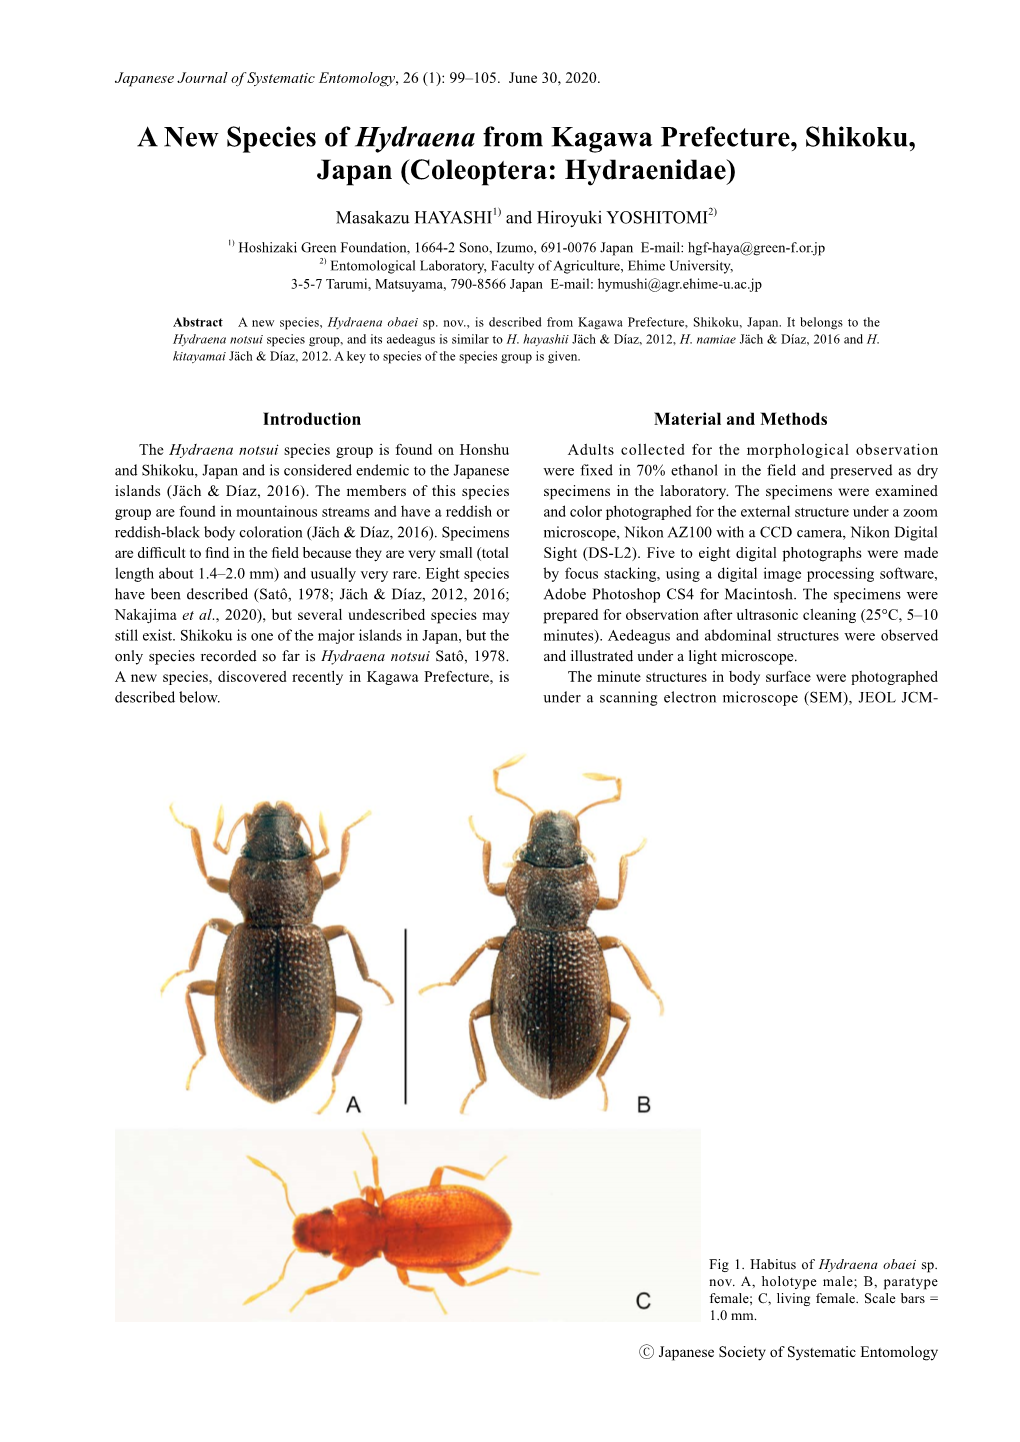 A New Species of Hydraena from Kagawa Prefecture, Shikoku, Japan (Coleoptera: Hydraenidae)